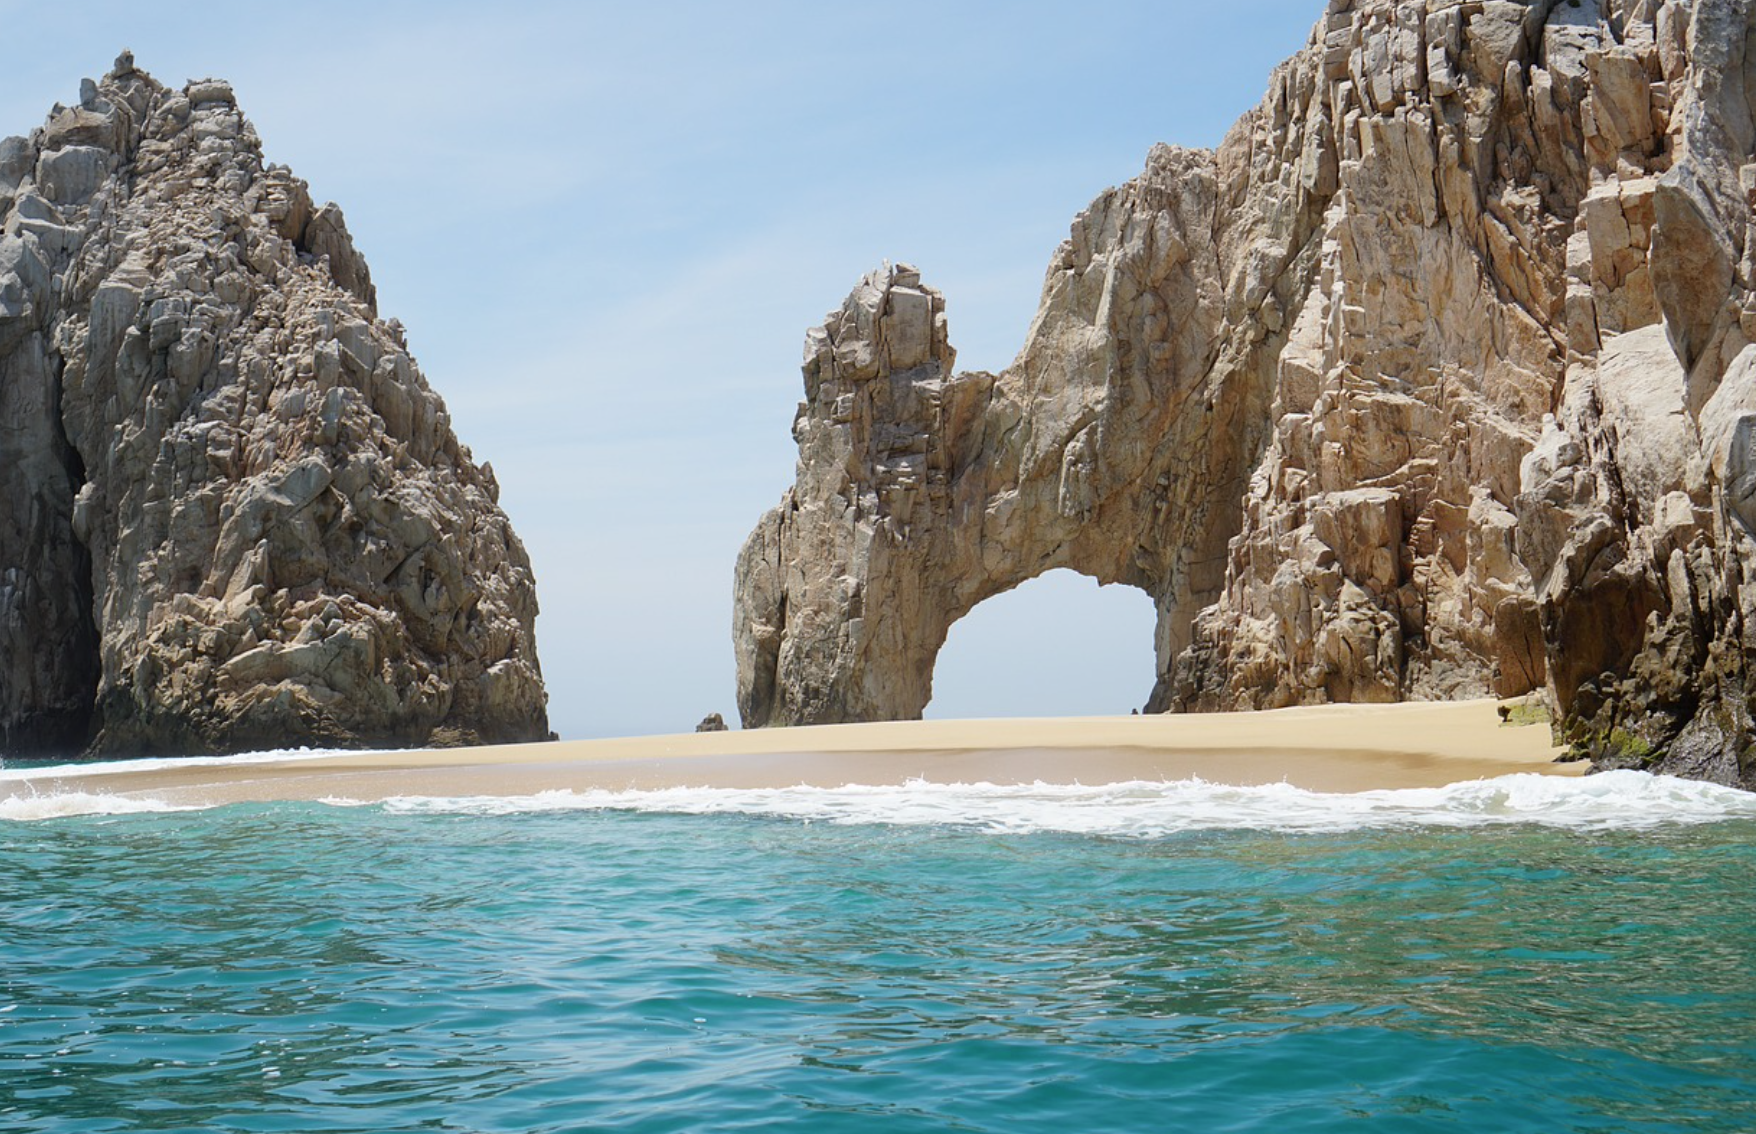 Secretaría de Turismo en Baja California emite comunicado tras asesinato de surfistas